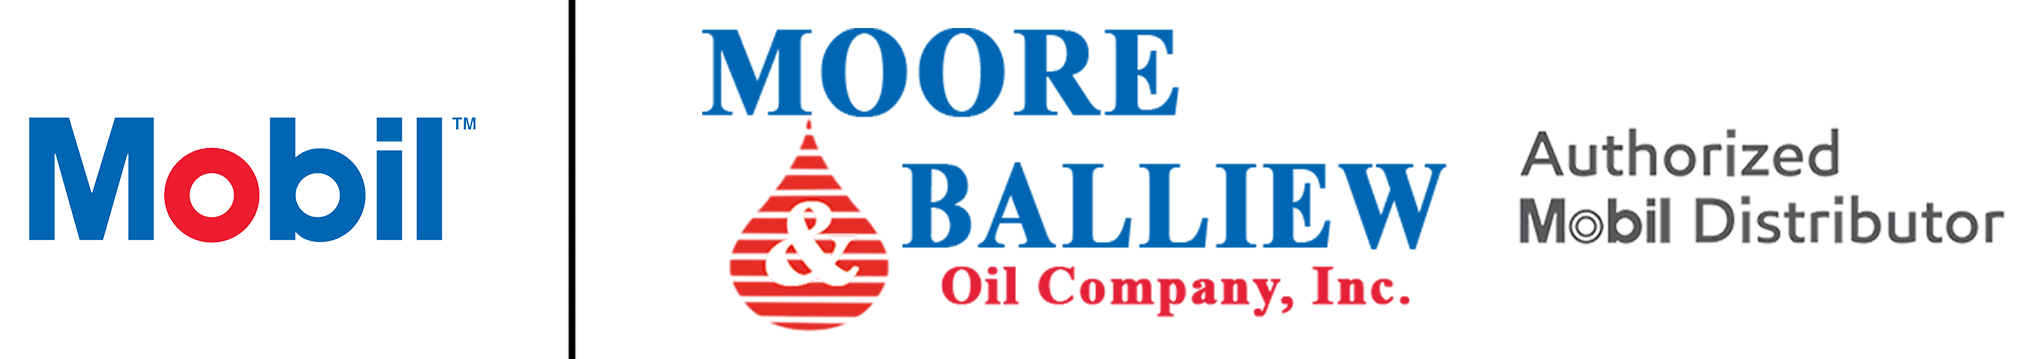 Moore & Balliew Oil